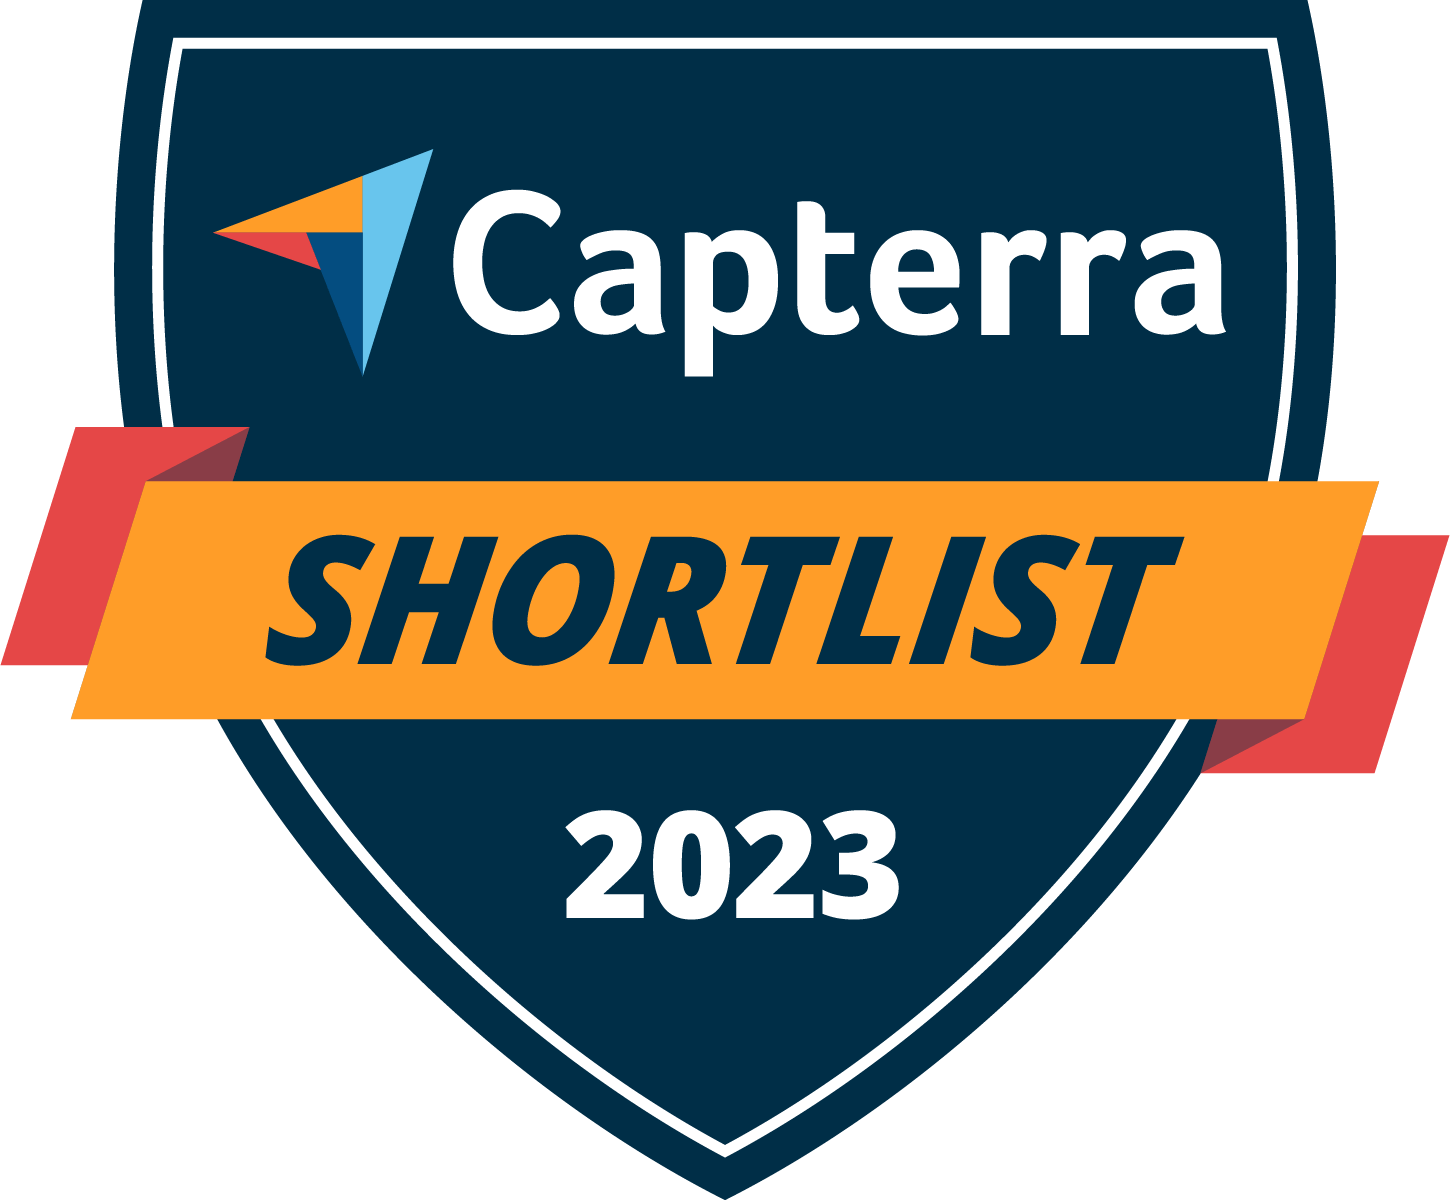 Capterra_Shortlist 2023_LMS, Onboarding, Training Software